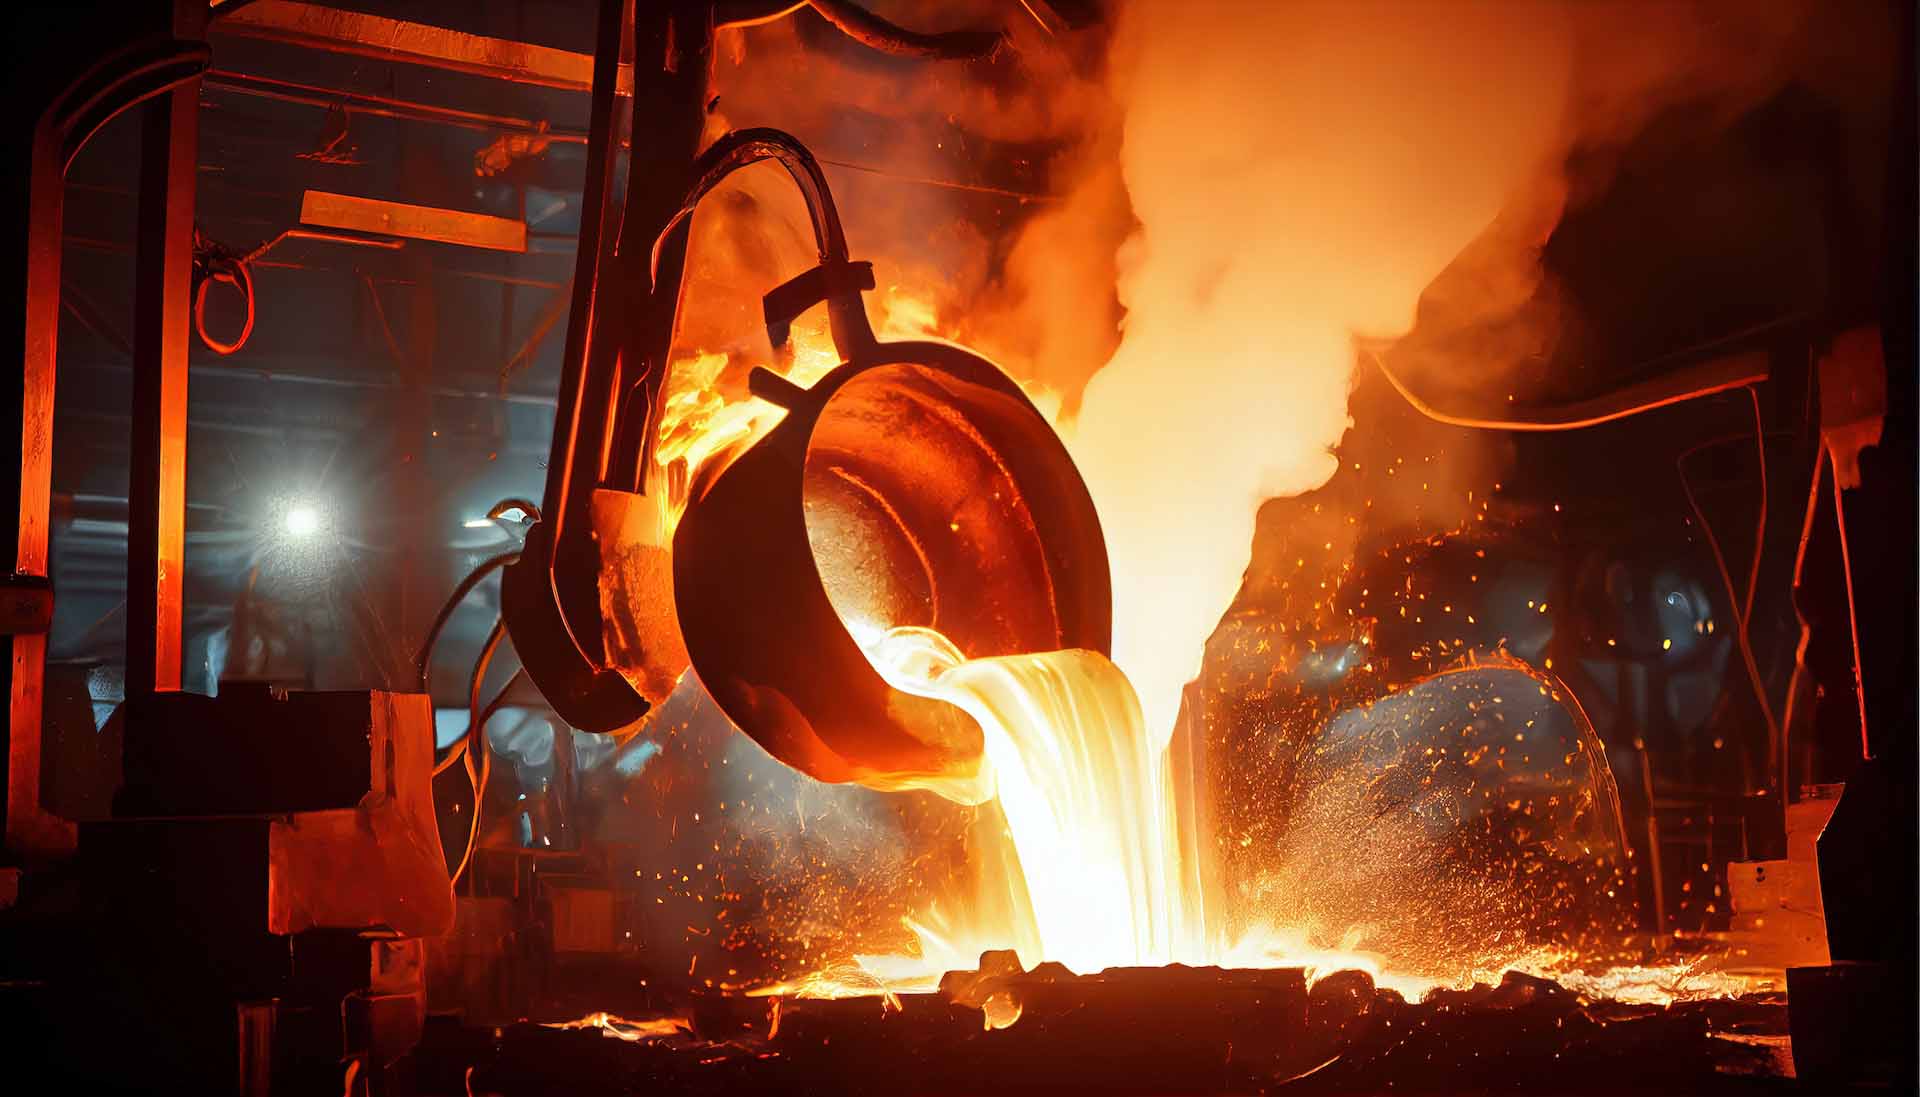 McLouth Steel Employees: Asbestos Exposure Risk